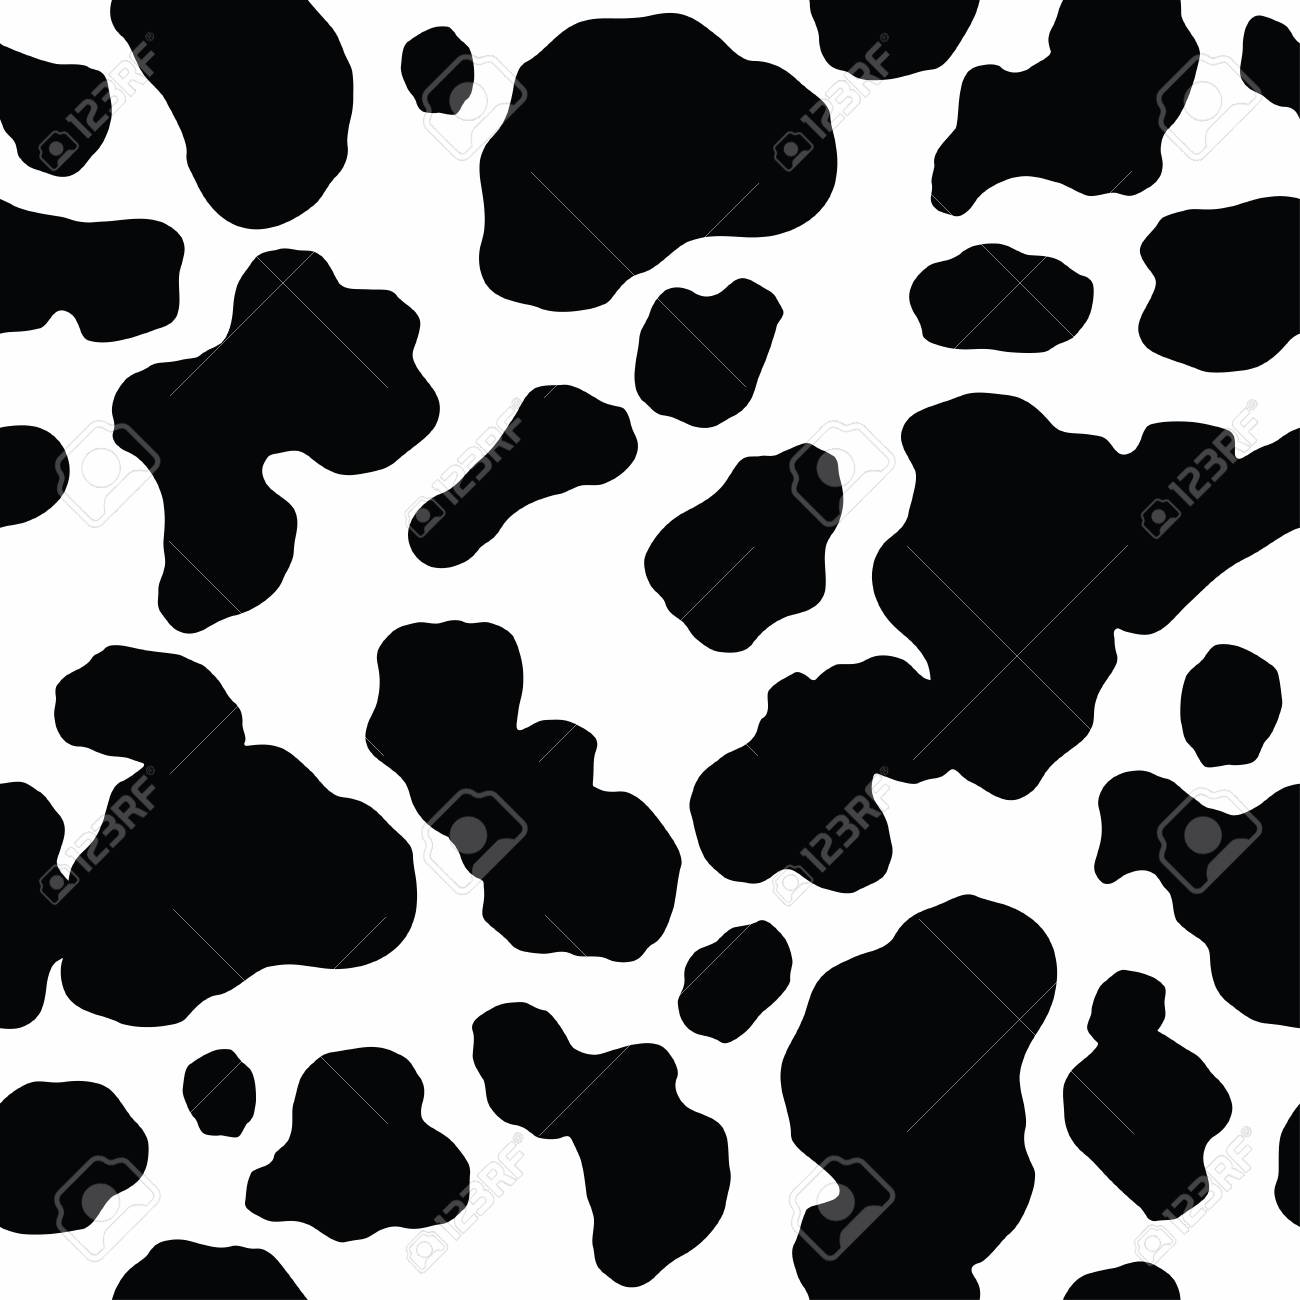 Cow or dalmatian spots pattern..